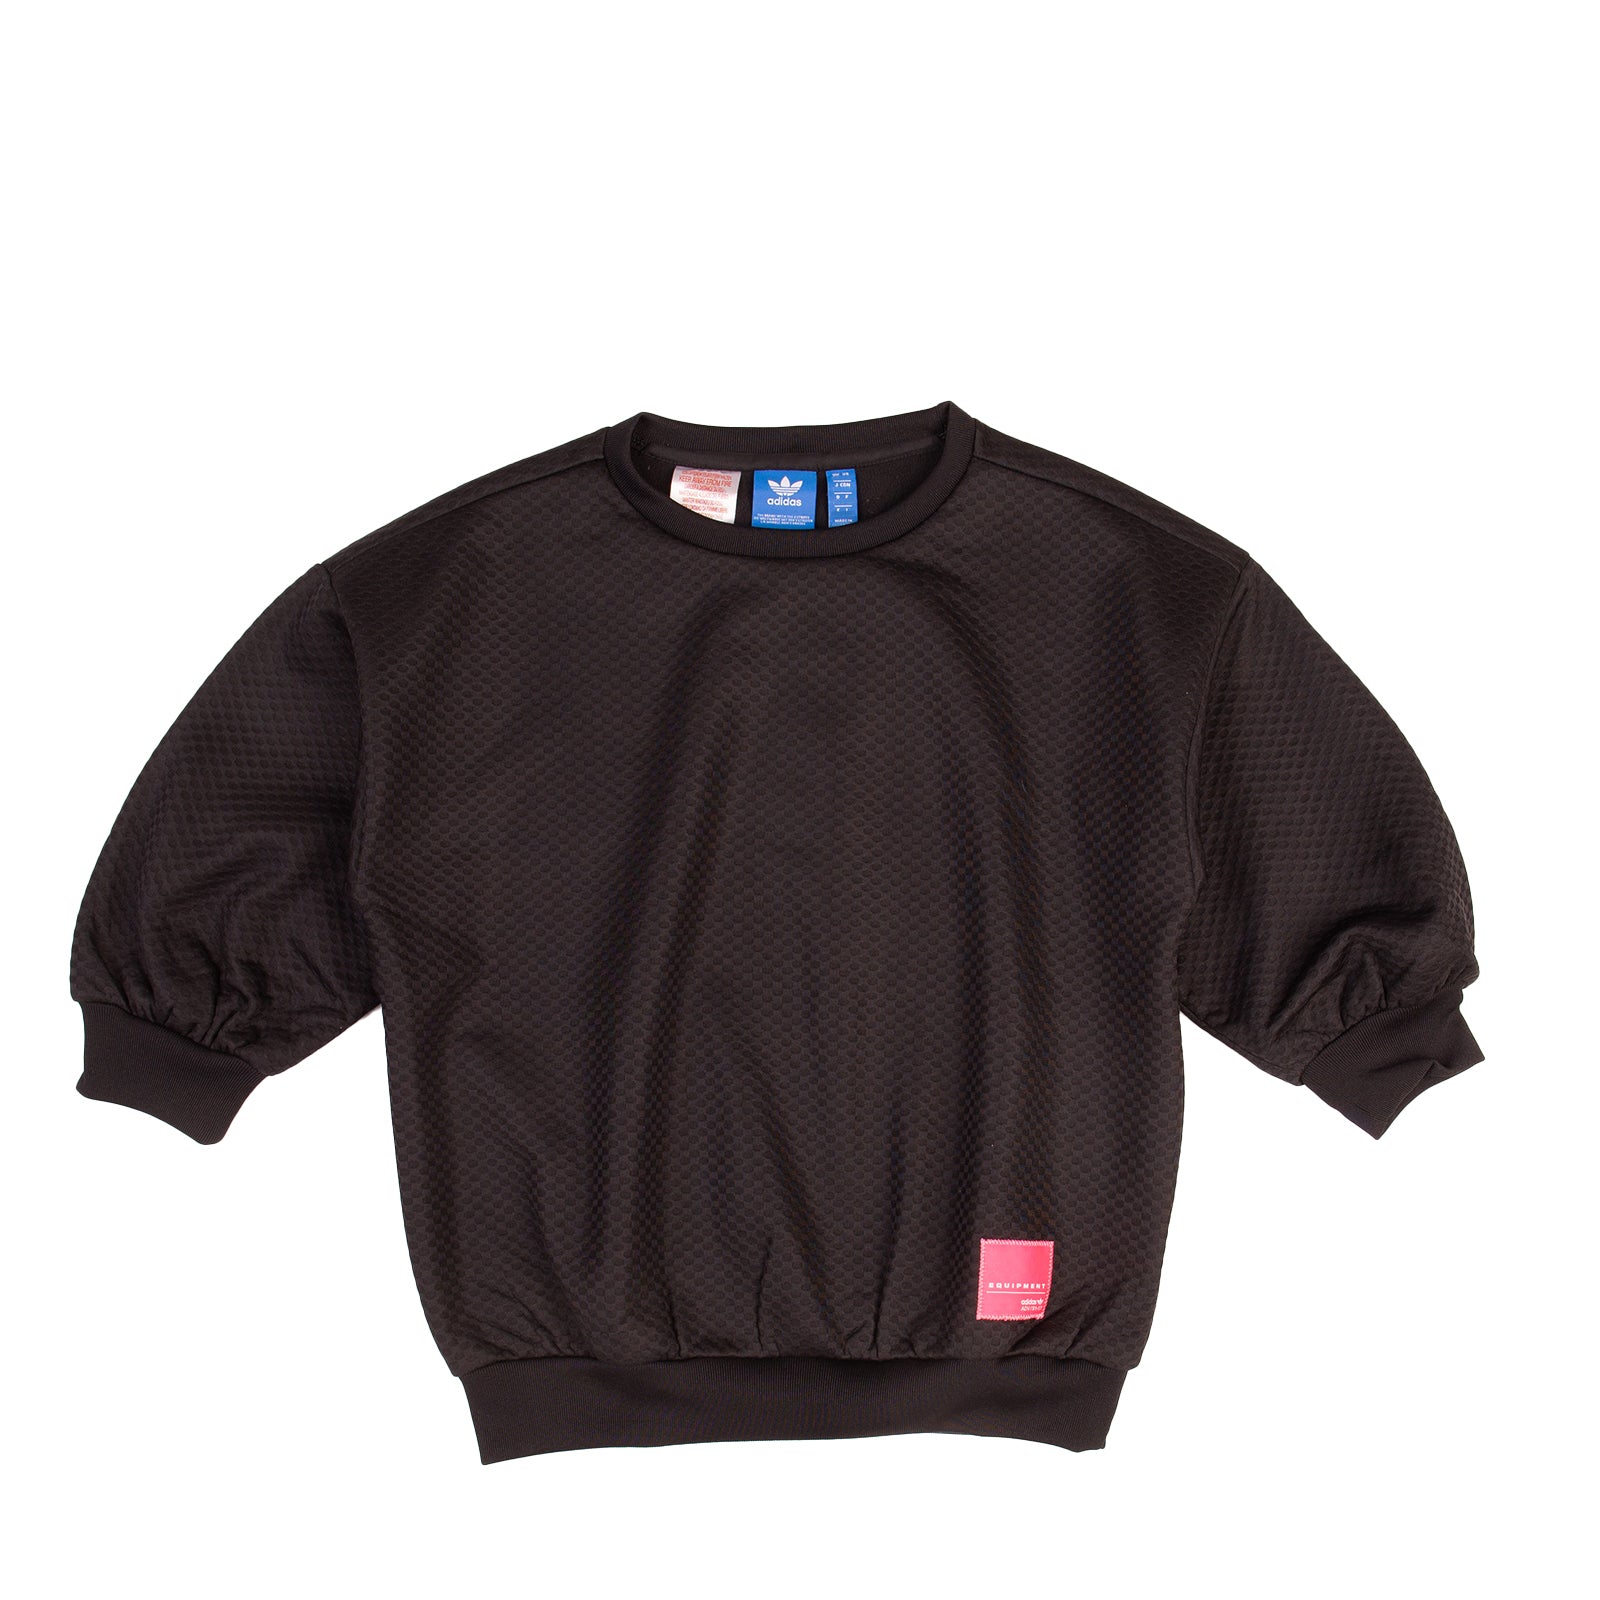 ADIDAS ORIGINALS EQUIPMENT Sweatshirt Size S / 9-10Y / 140CM Black 